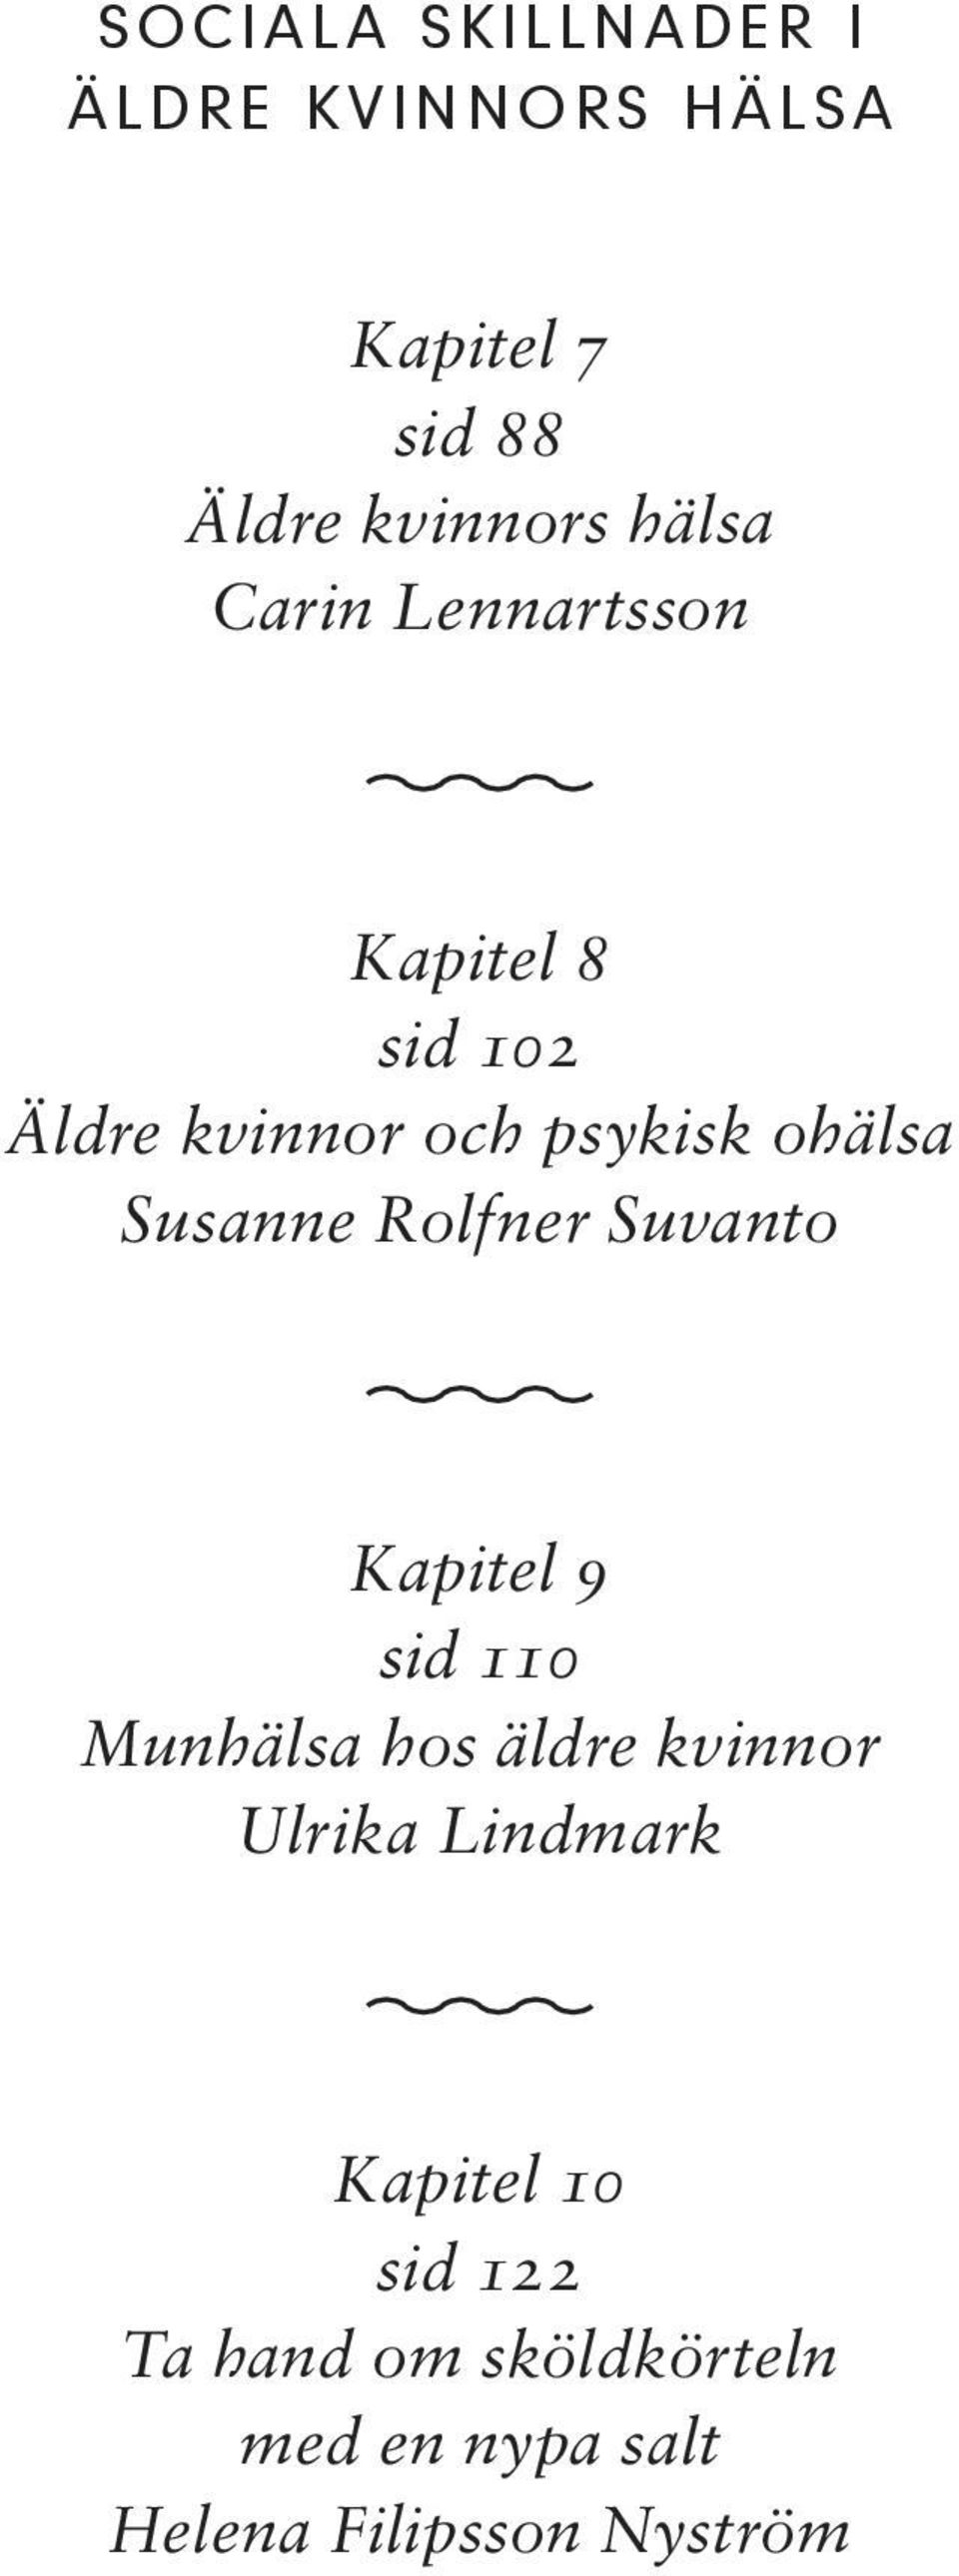 Rolfner Suvanto Kapitel 9 sid 110 Munhälsa hos äldre kvinnor Ulrika